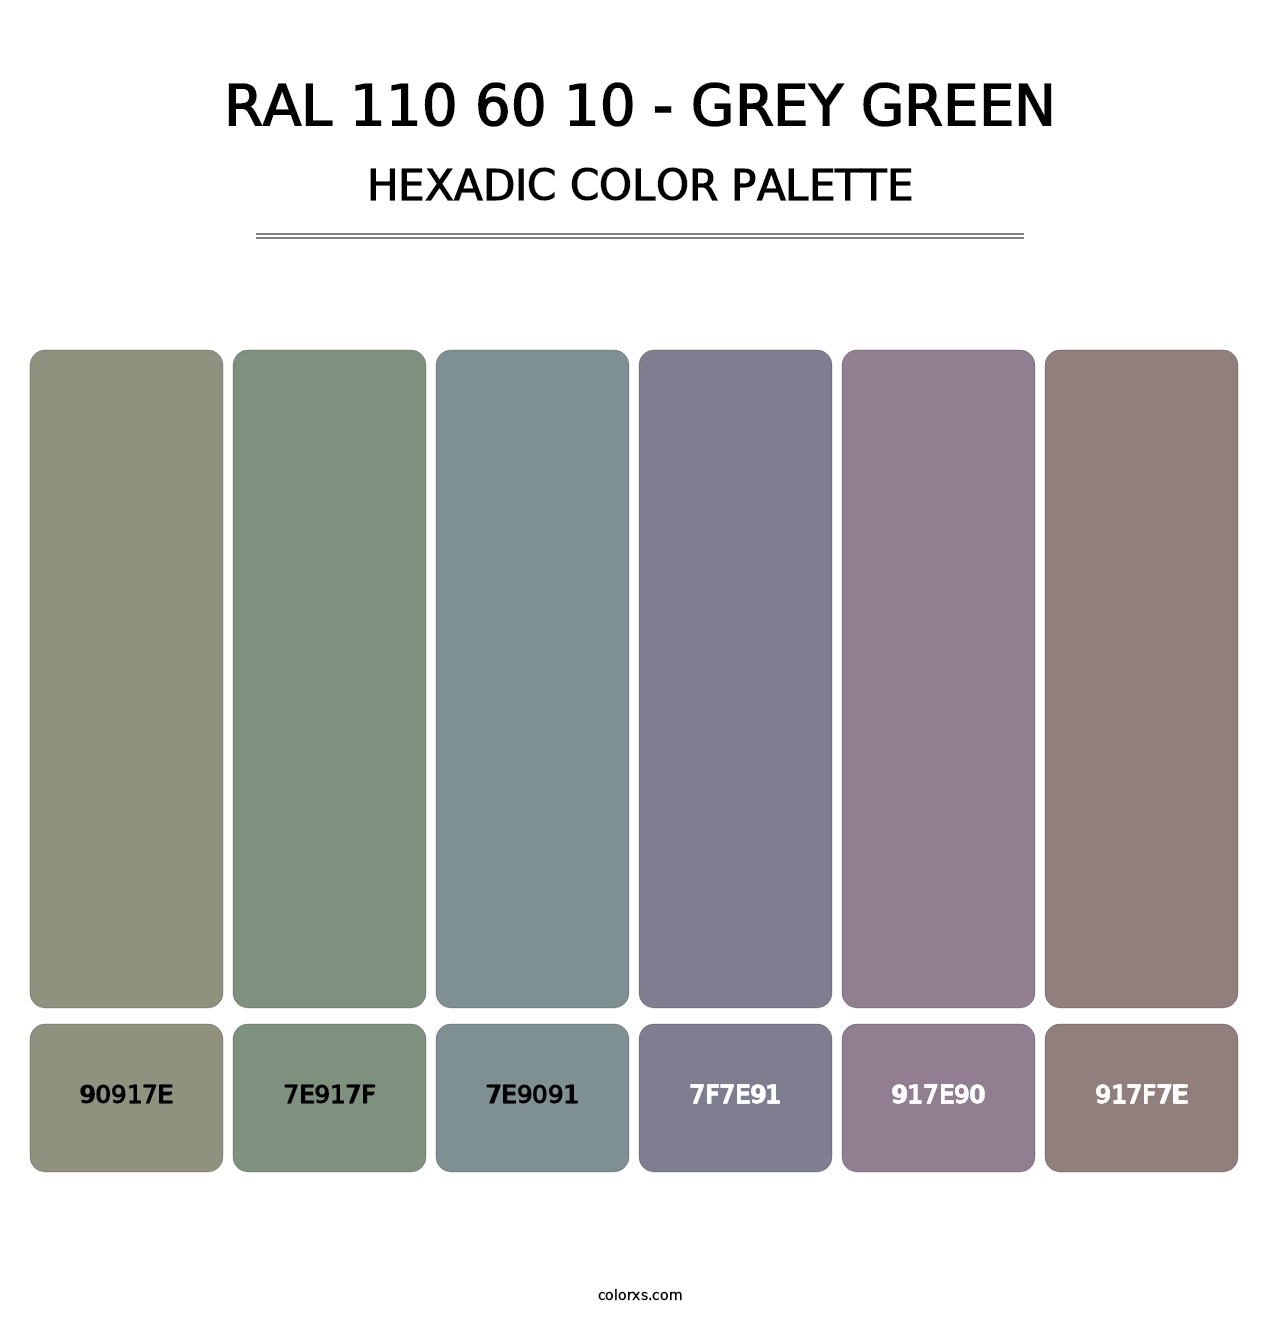 RAL 110 60 10 - Grey Green - Hexadic Color Palette